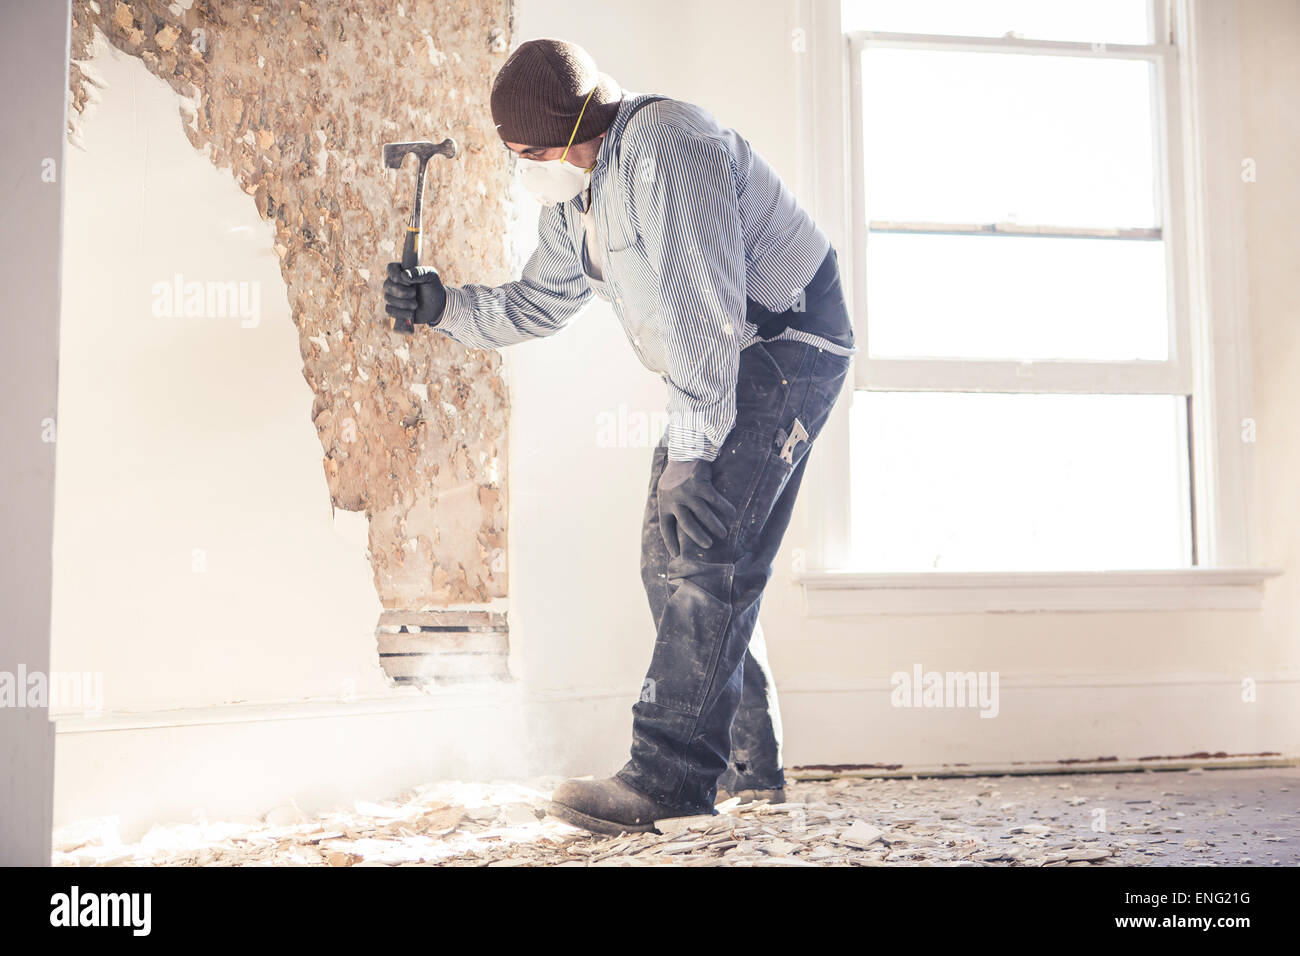 Hispanic construction worker hammering wall Stock Photo